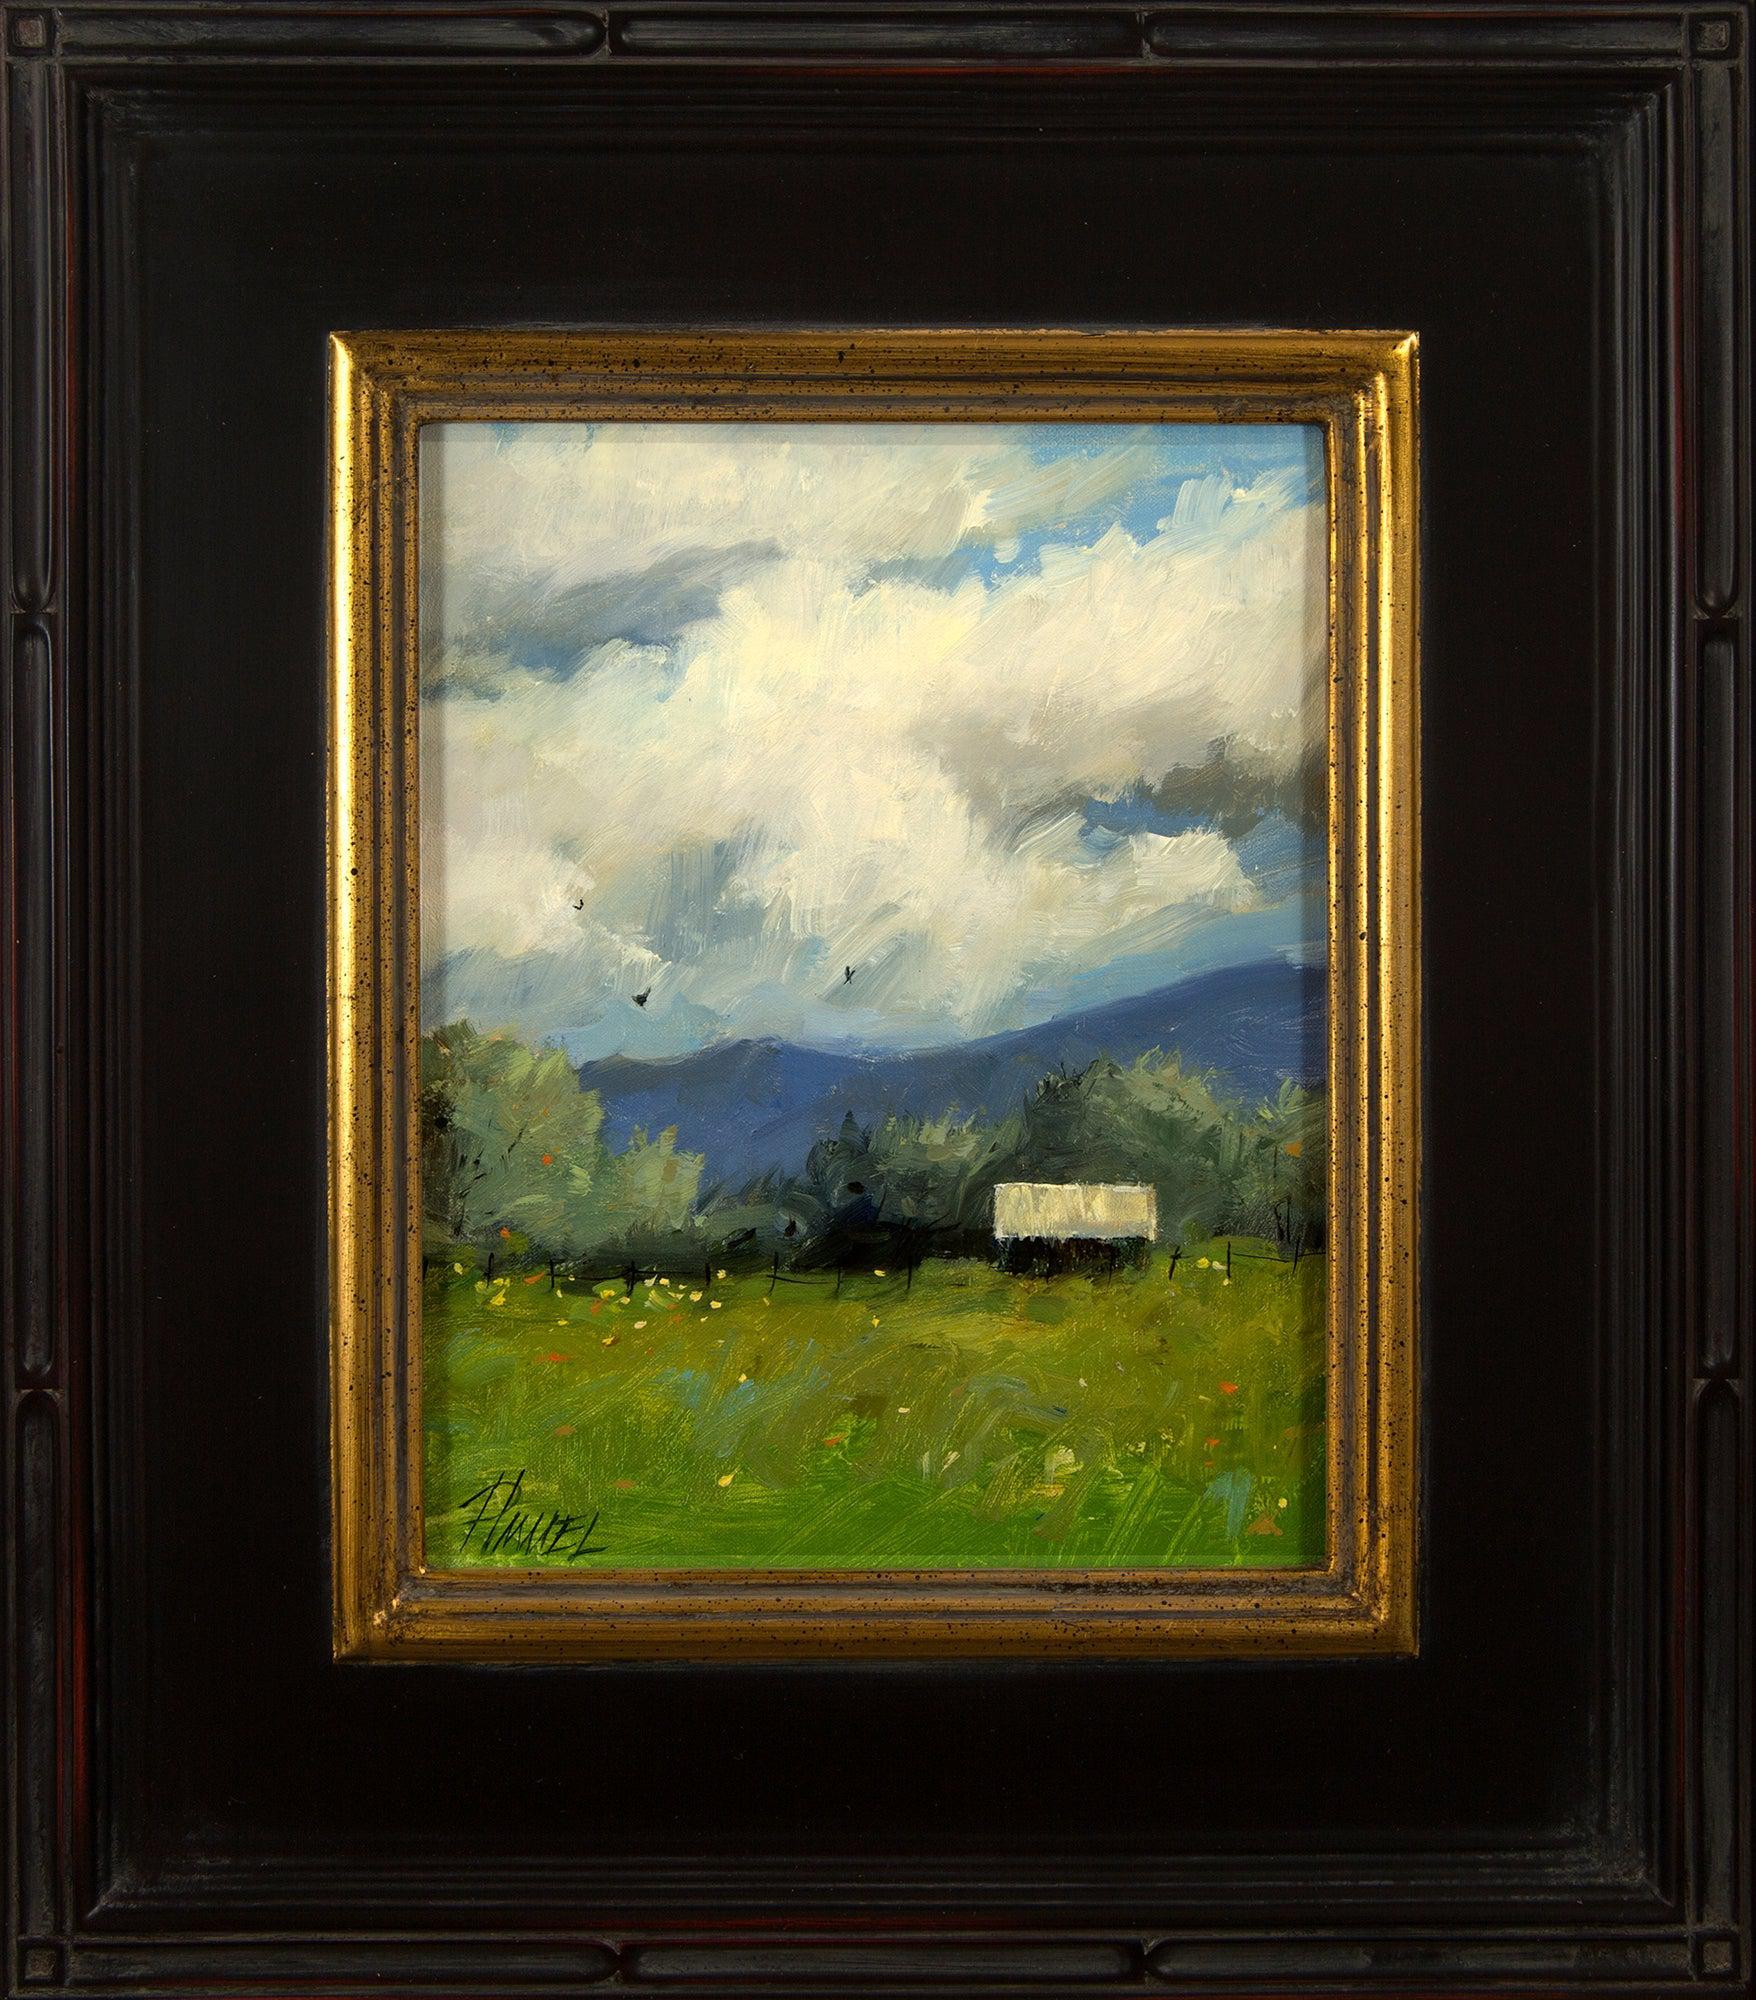 Summer Shack-Painting-Peggy Immel-Sorrel Sky Gallery